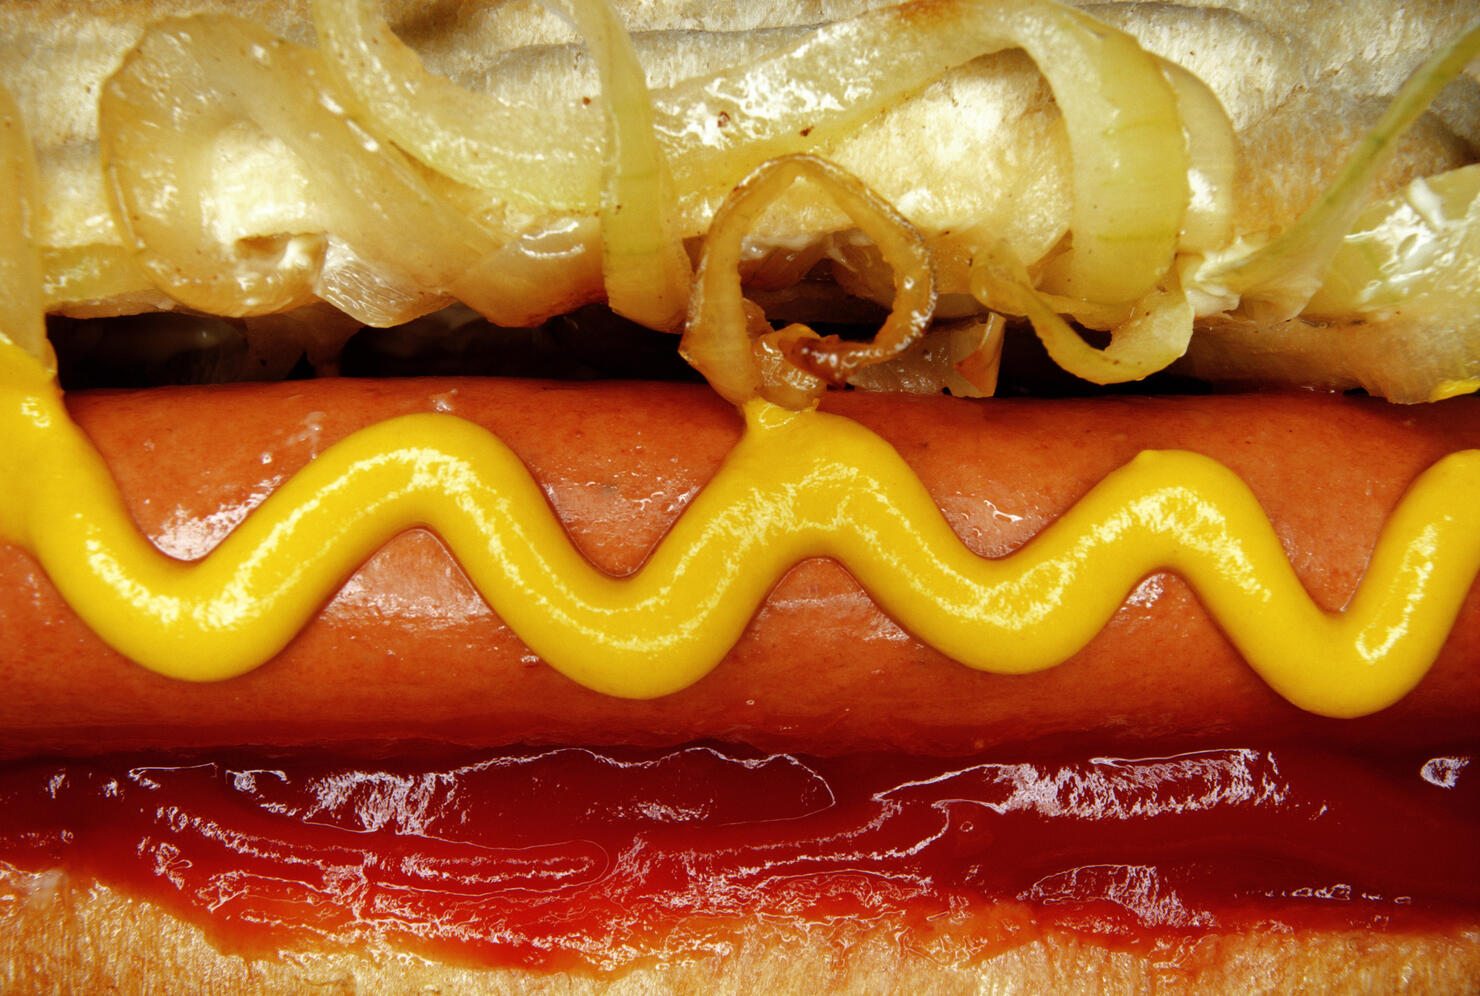 Hotdog with mustard, tomato ketchup and onions, close-up